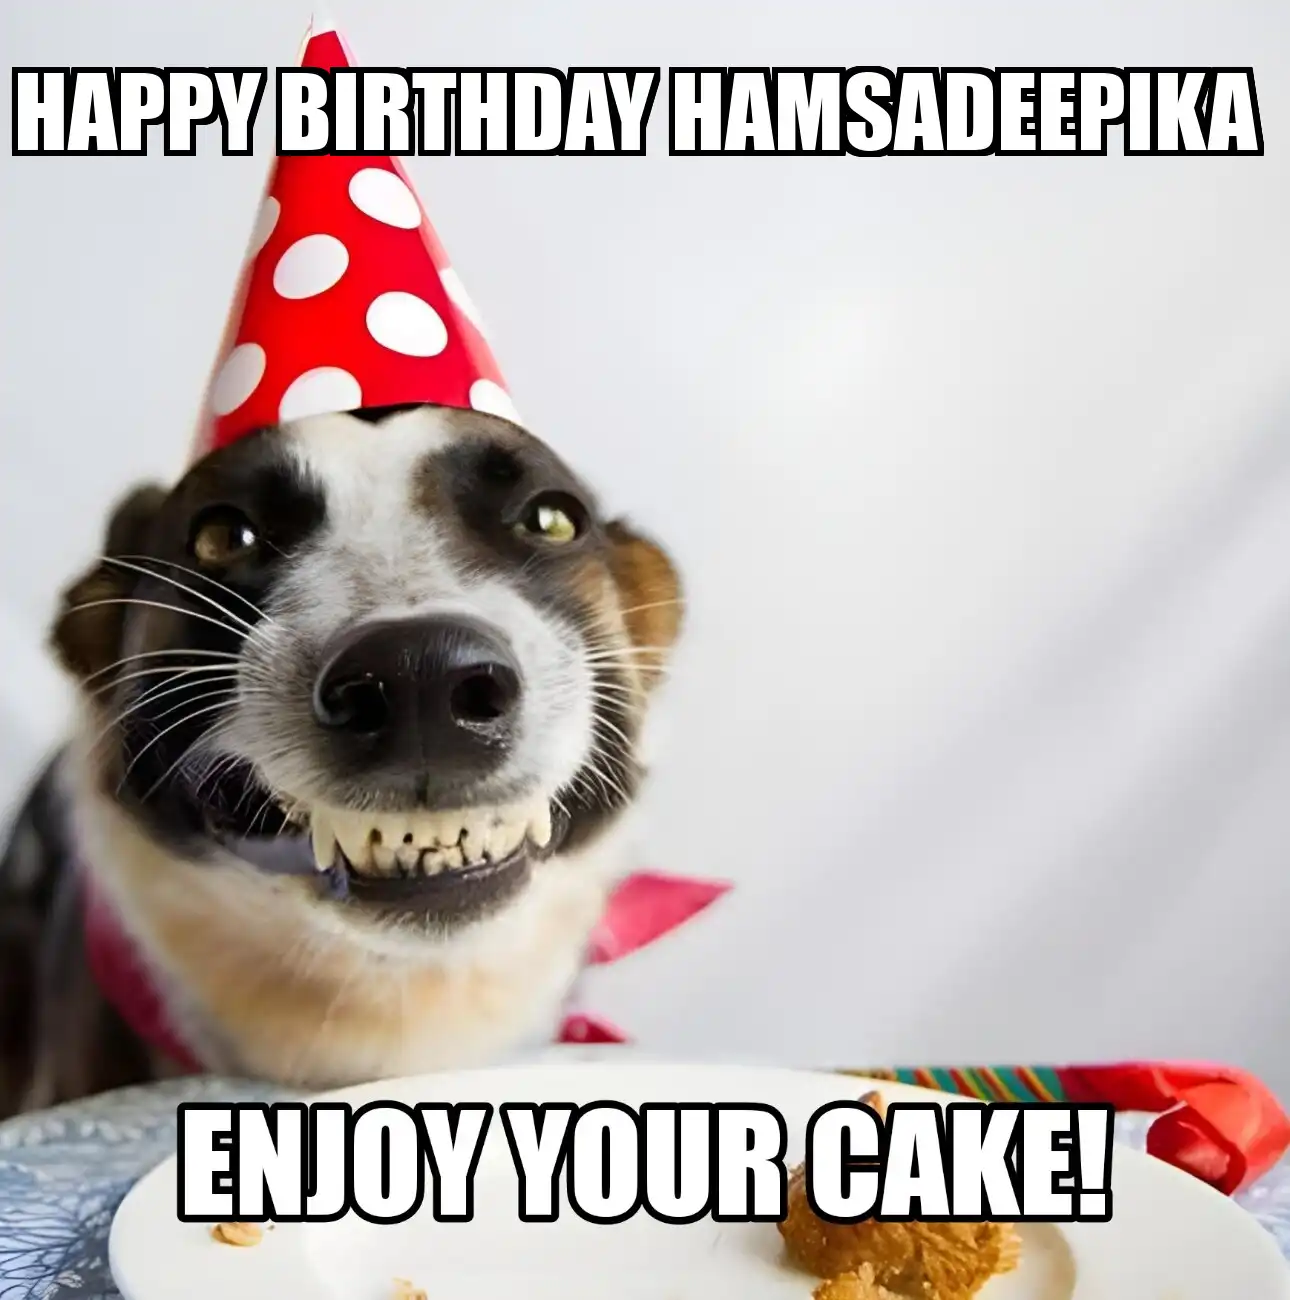 Happy Birthday Hamsadeepika Enjoy Your Cake Dog Meme